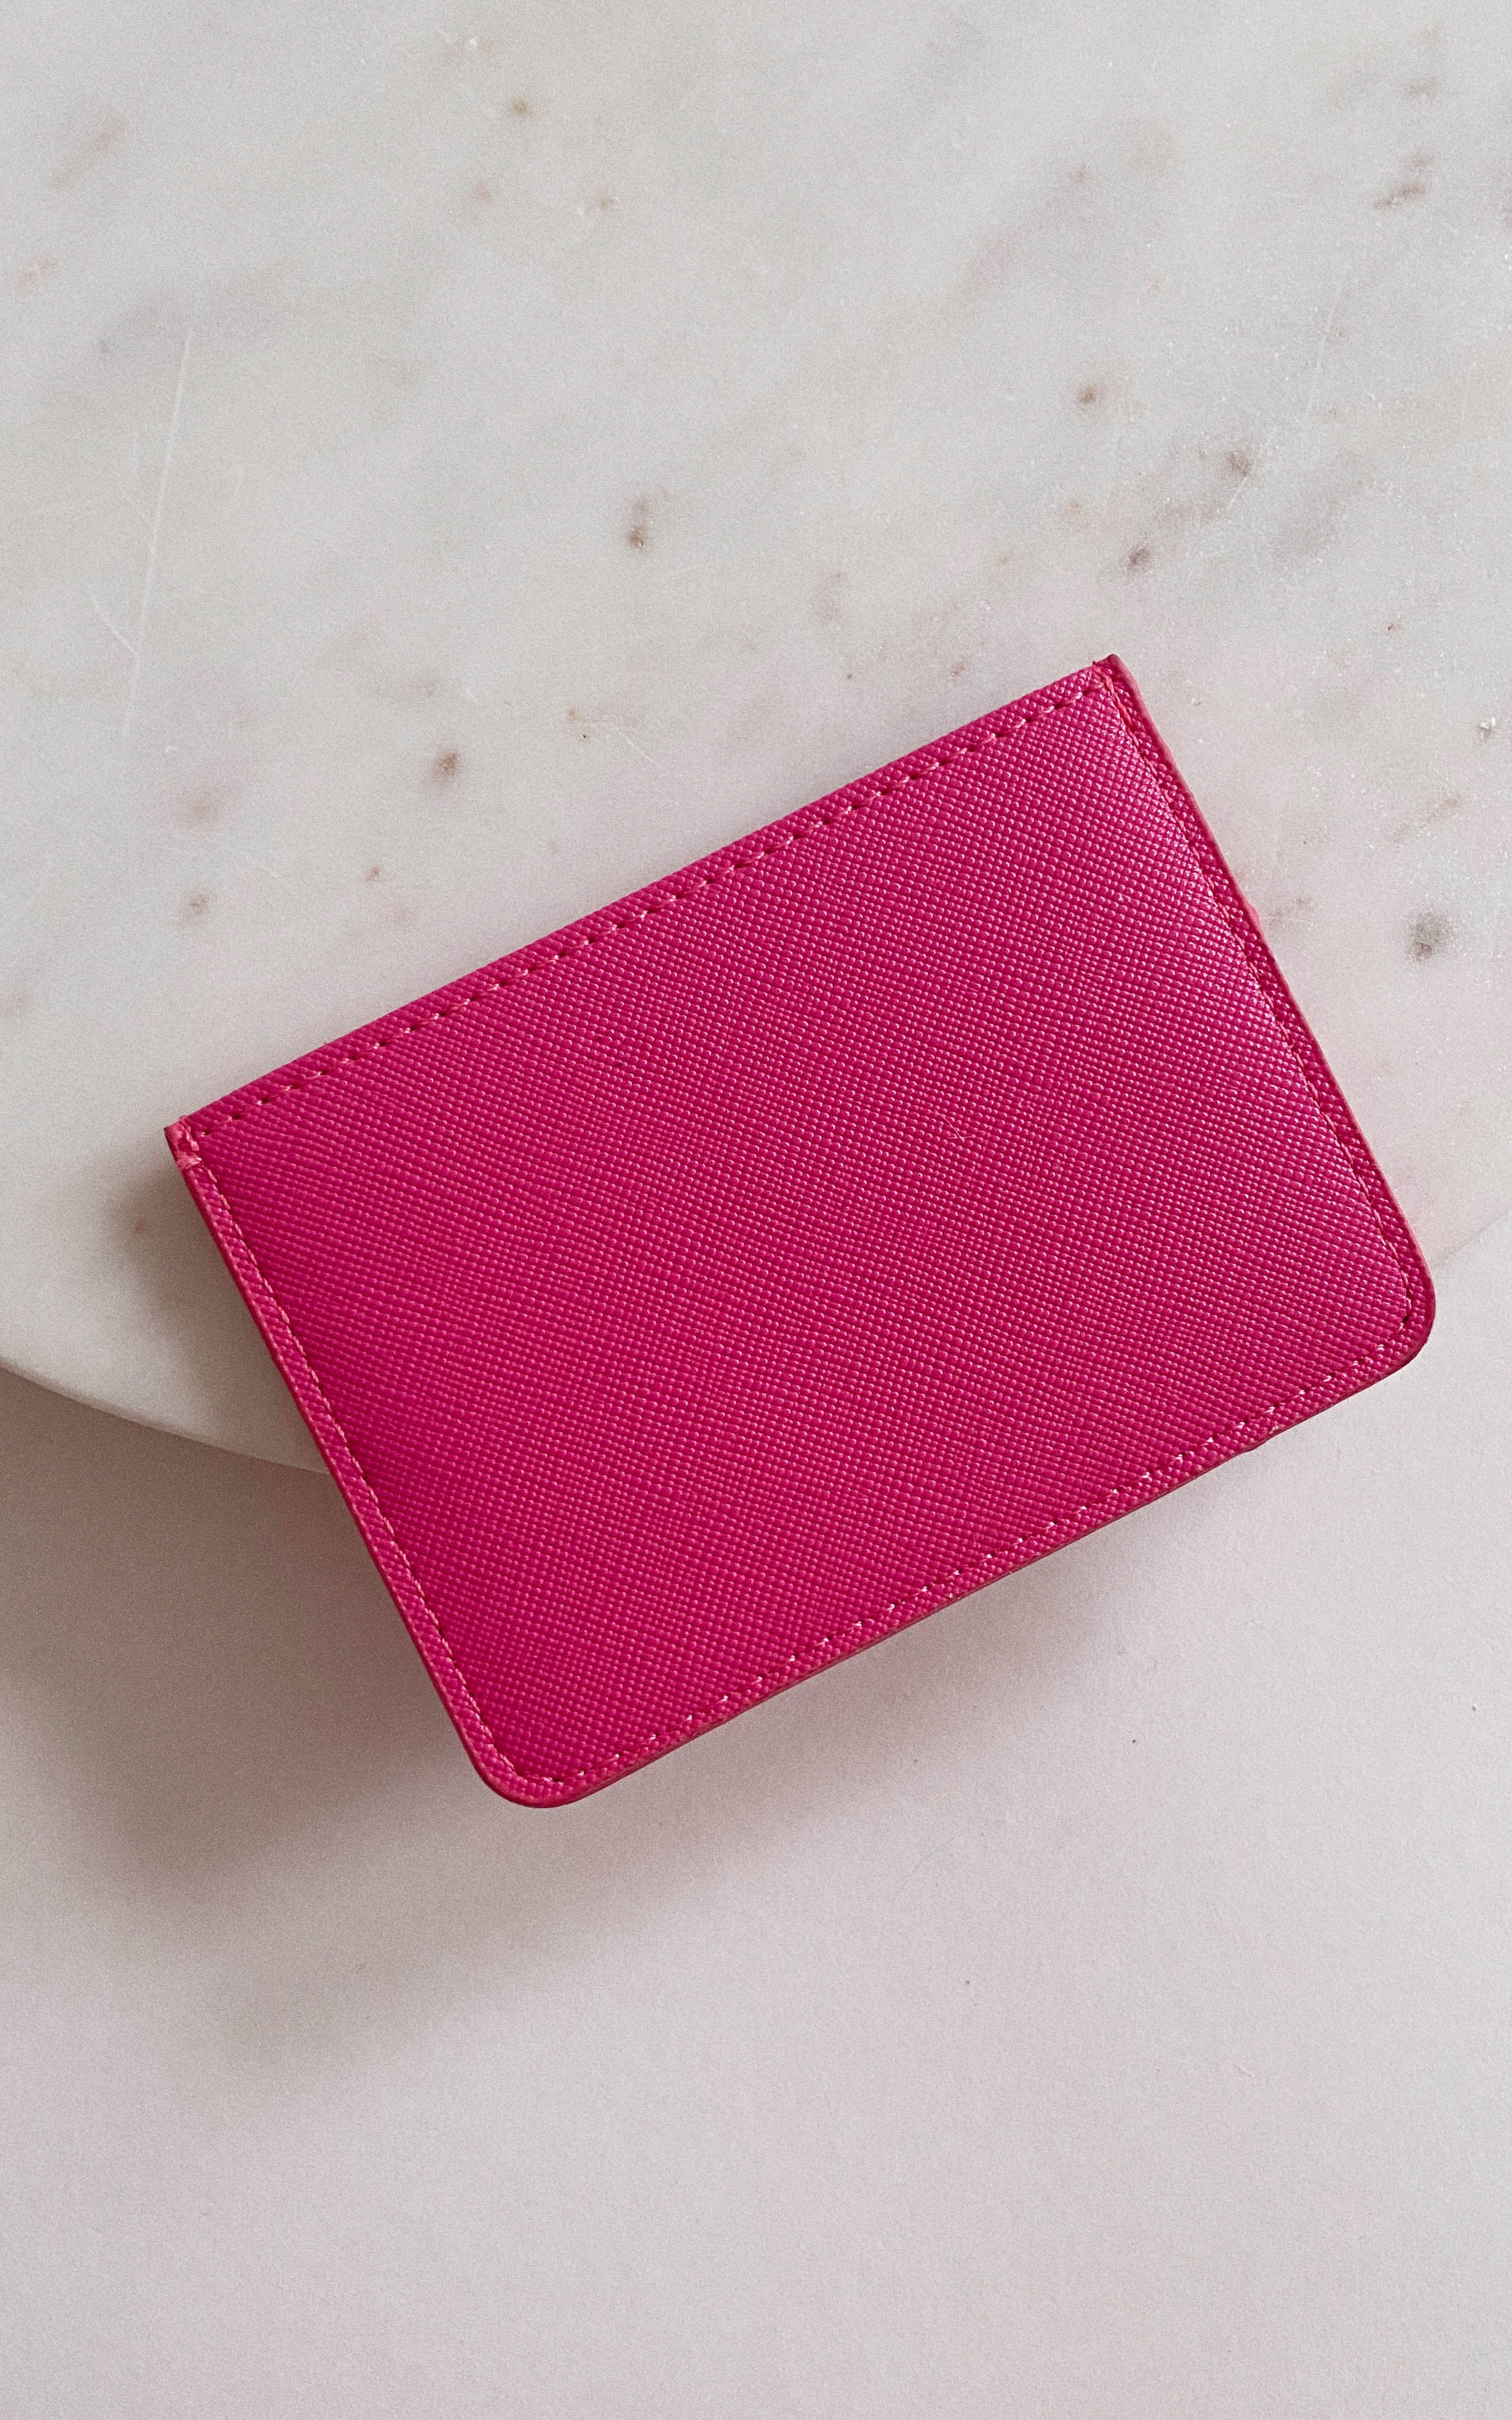 Hot Pink Credit Card Wallet